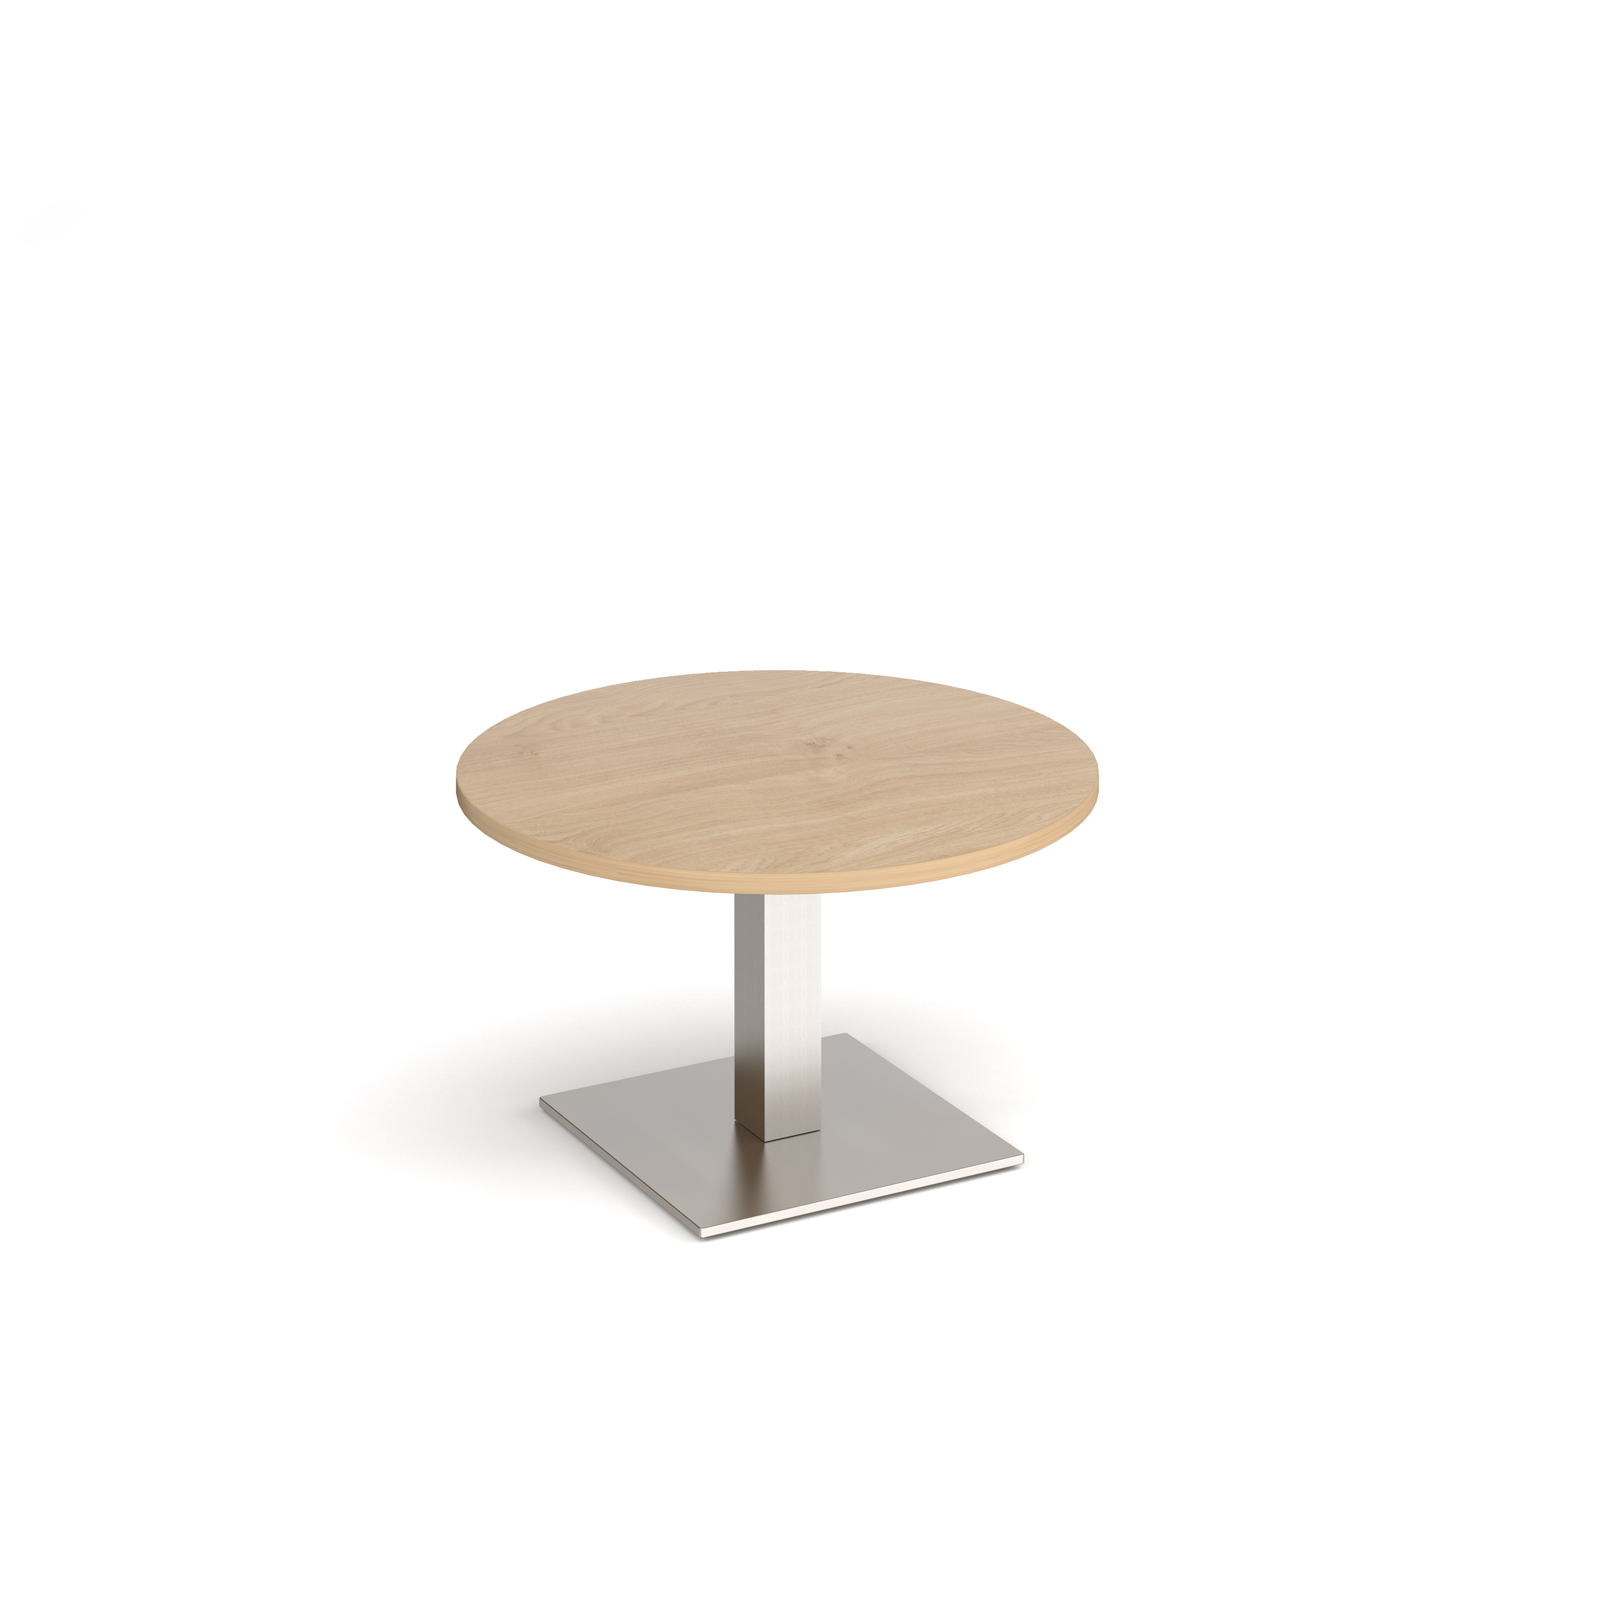 Brescia circular coffee table with flat square base